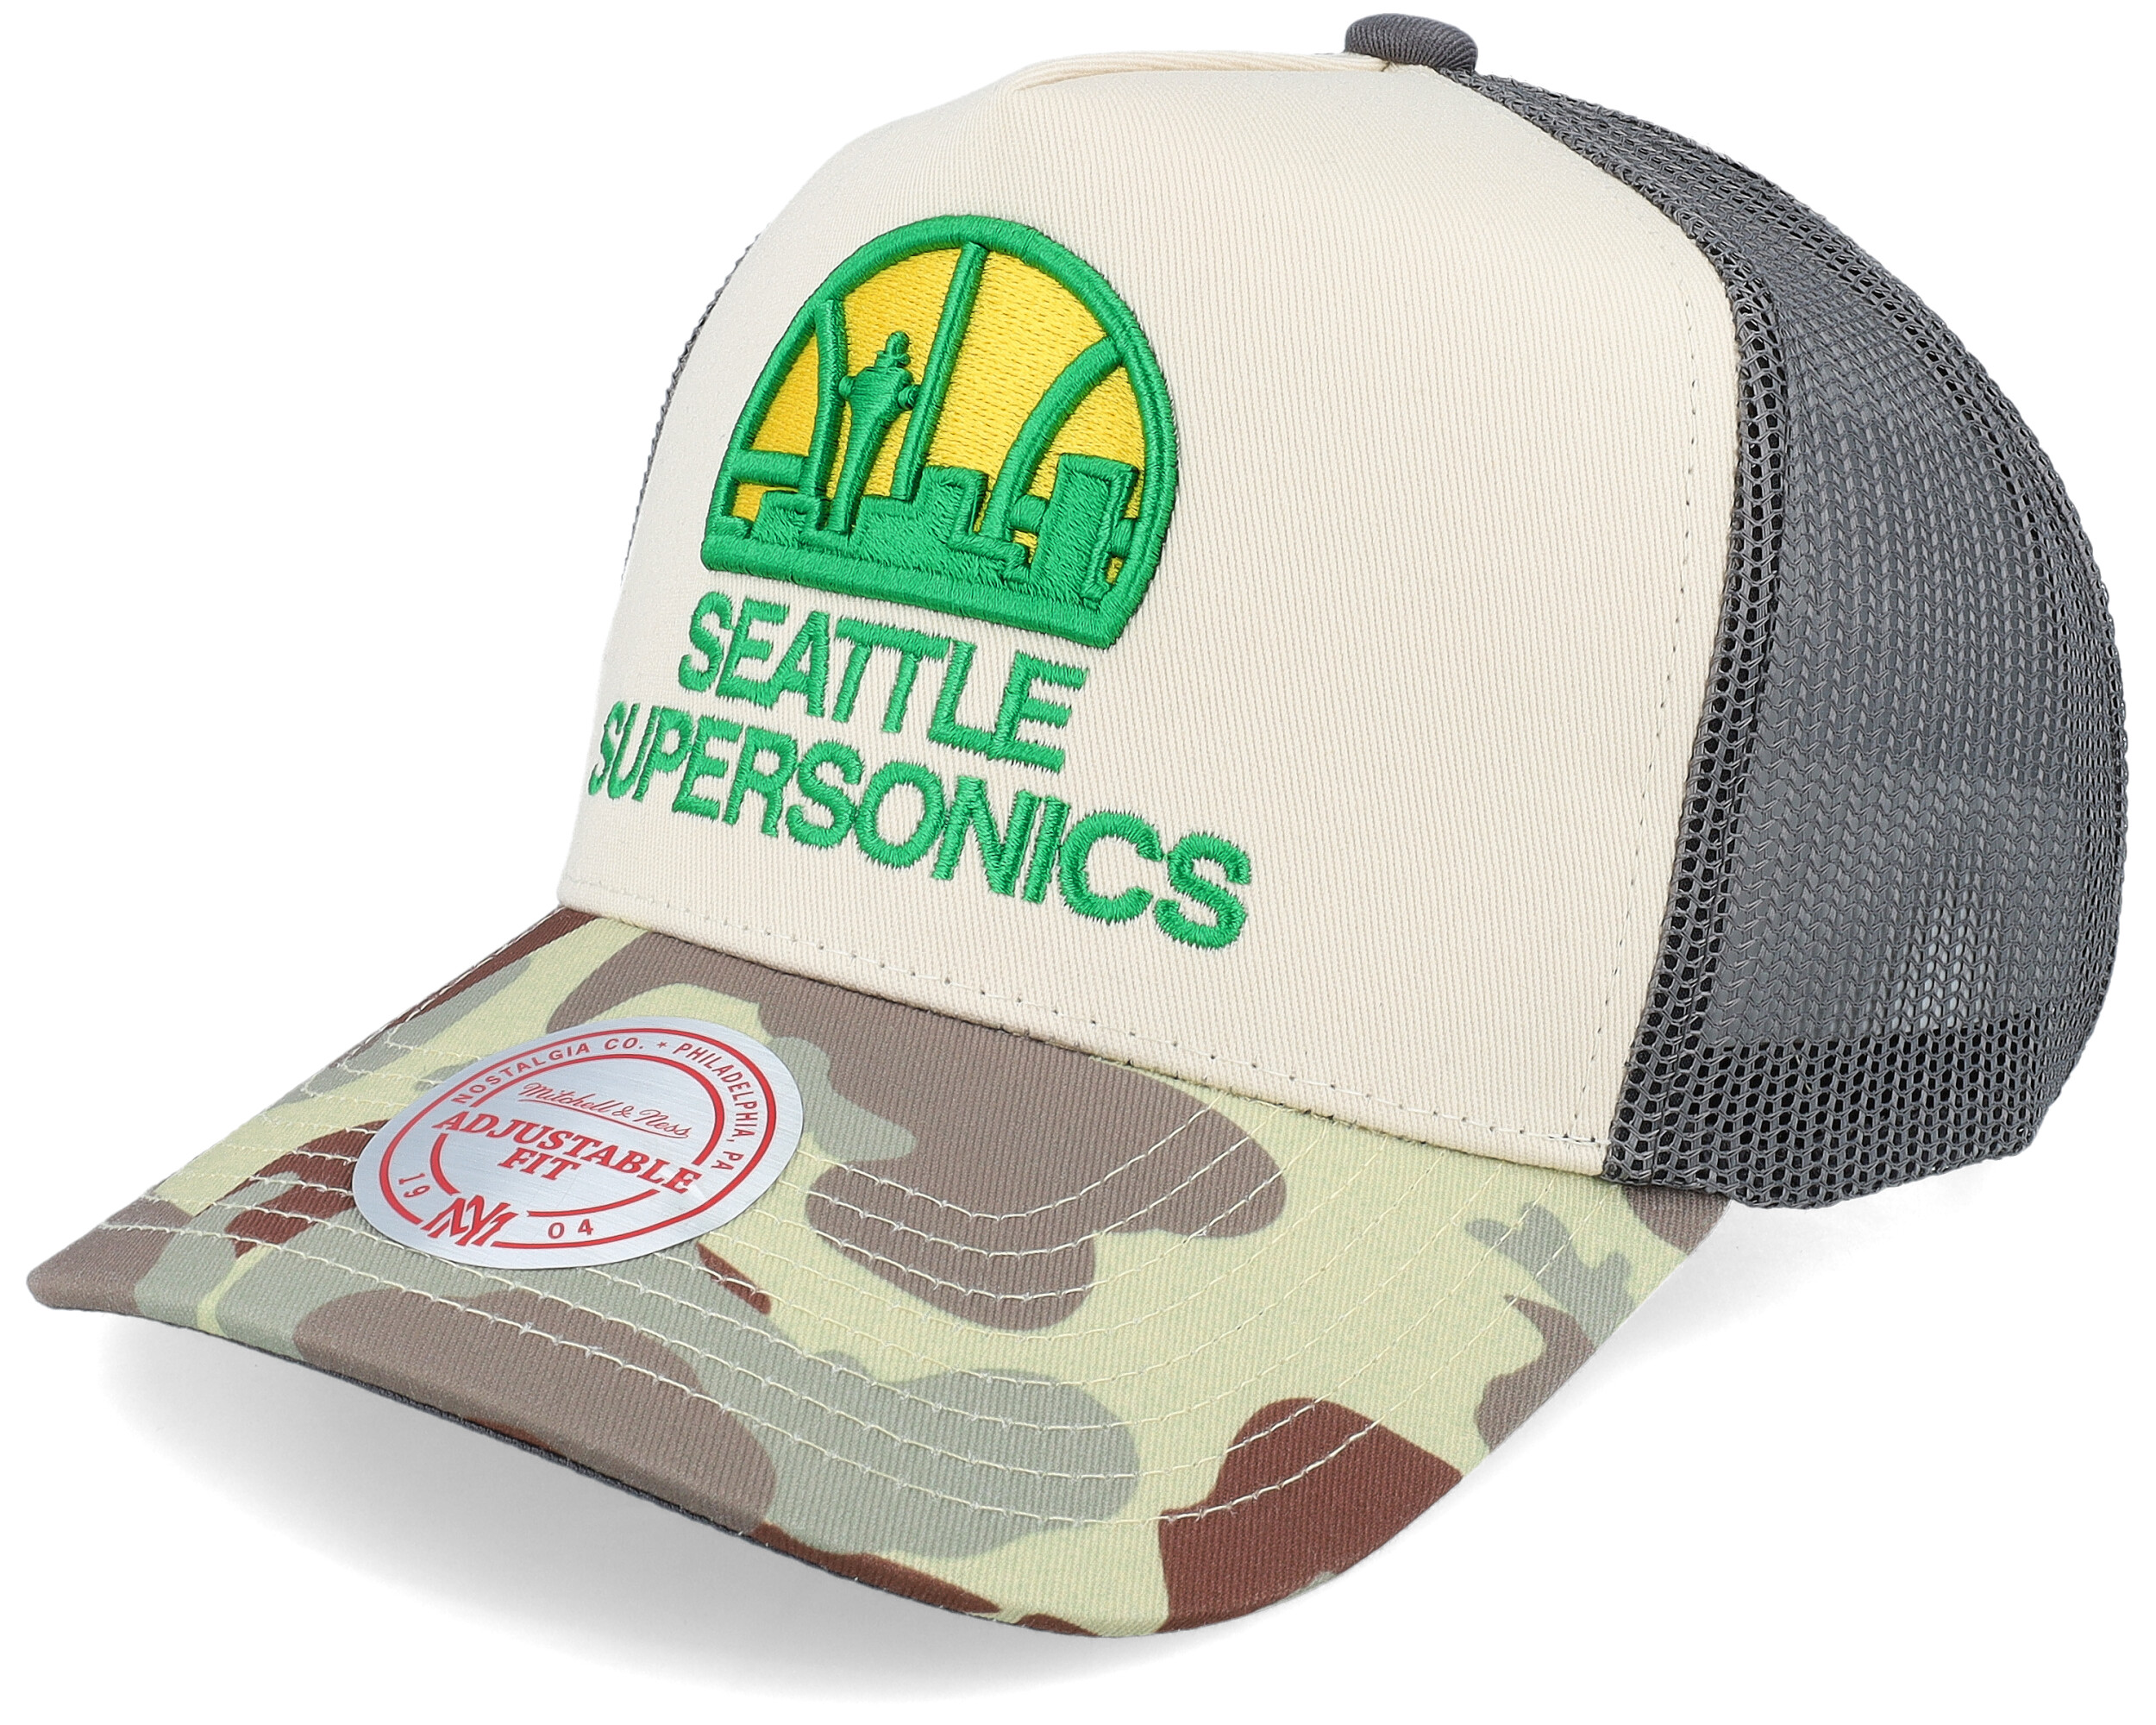 seattle supersonics trucker hat